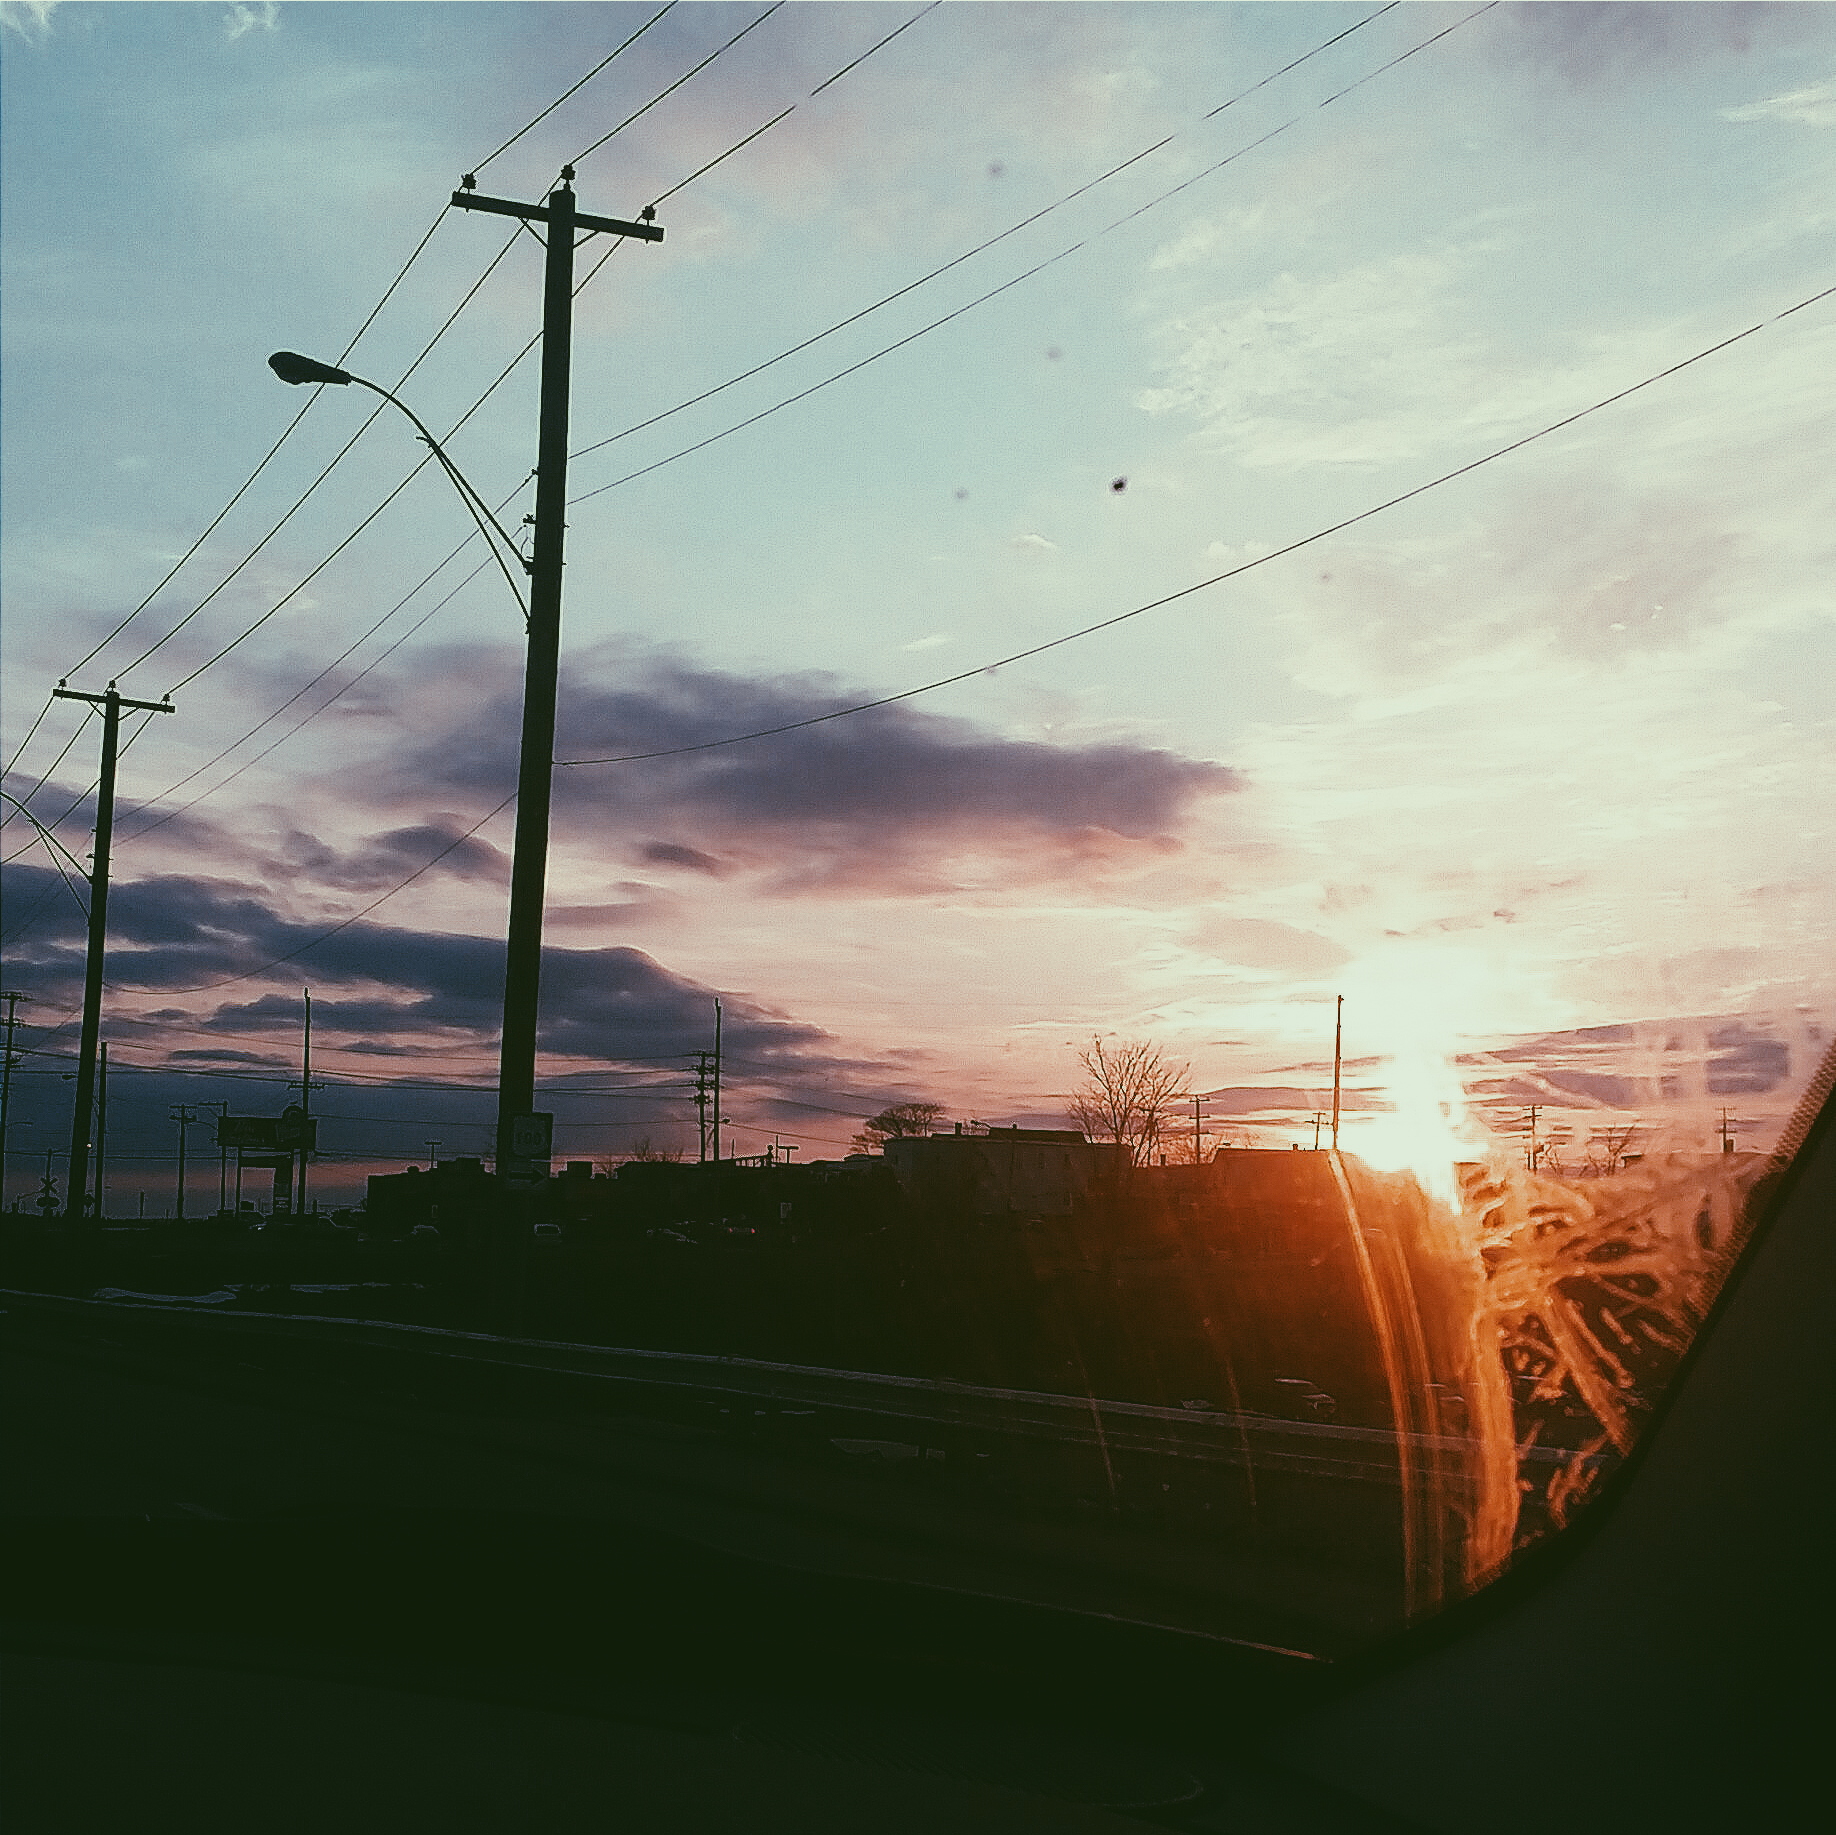 Sunset through the windshield